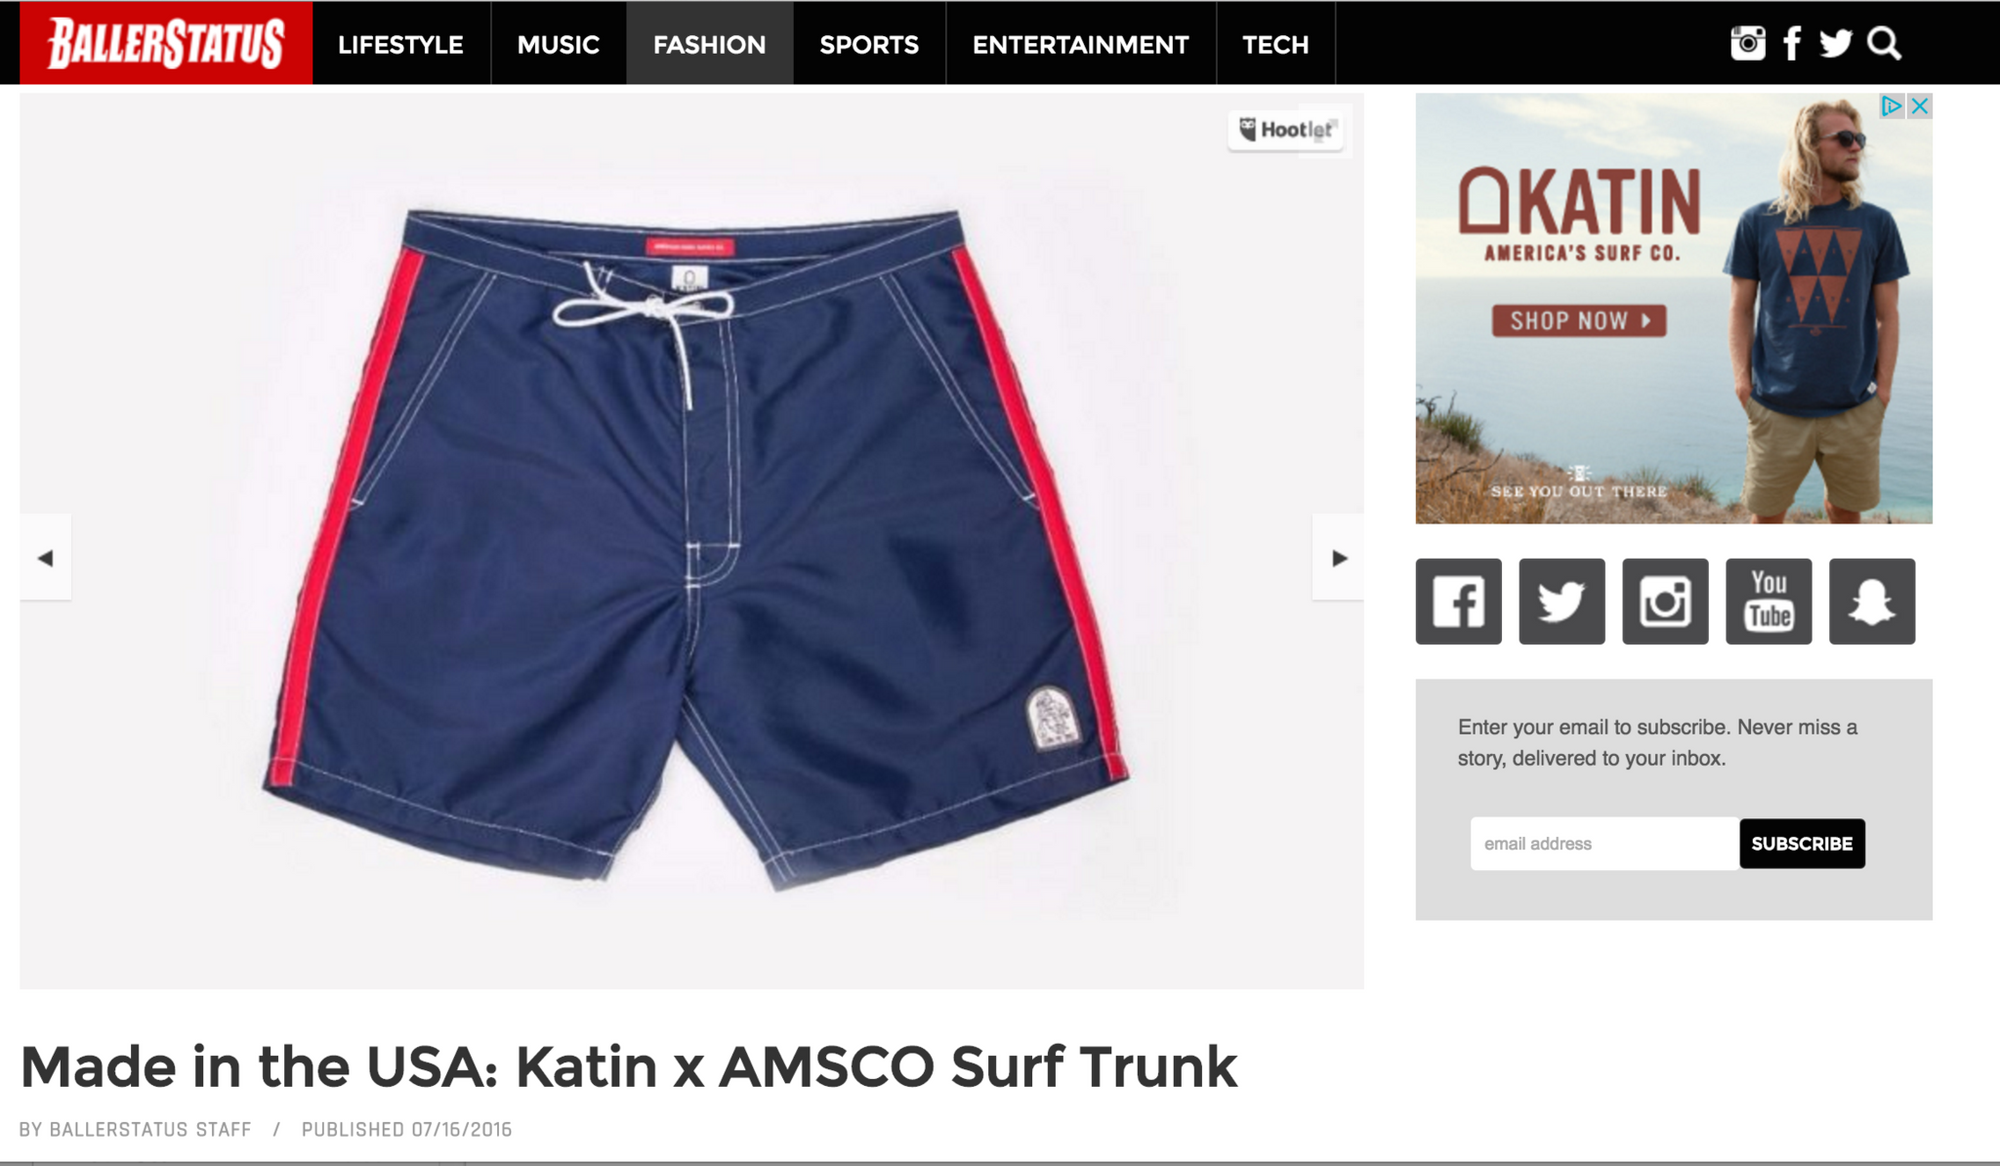 PRESS: BallerStatus.com "Made in the USA: Katin x AMSCO Surf Trunk"